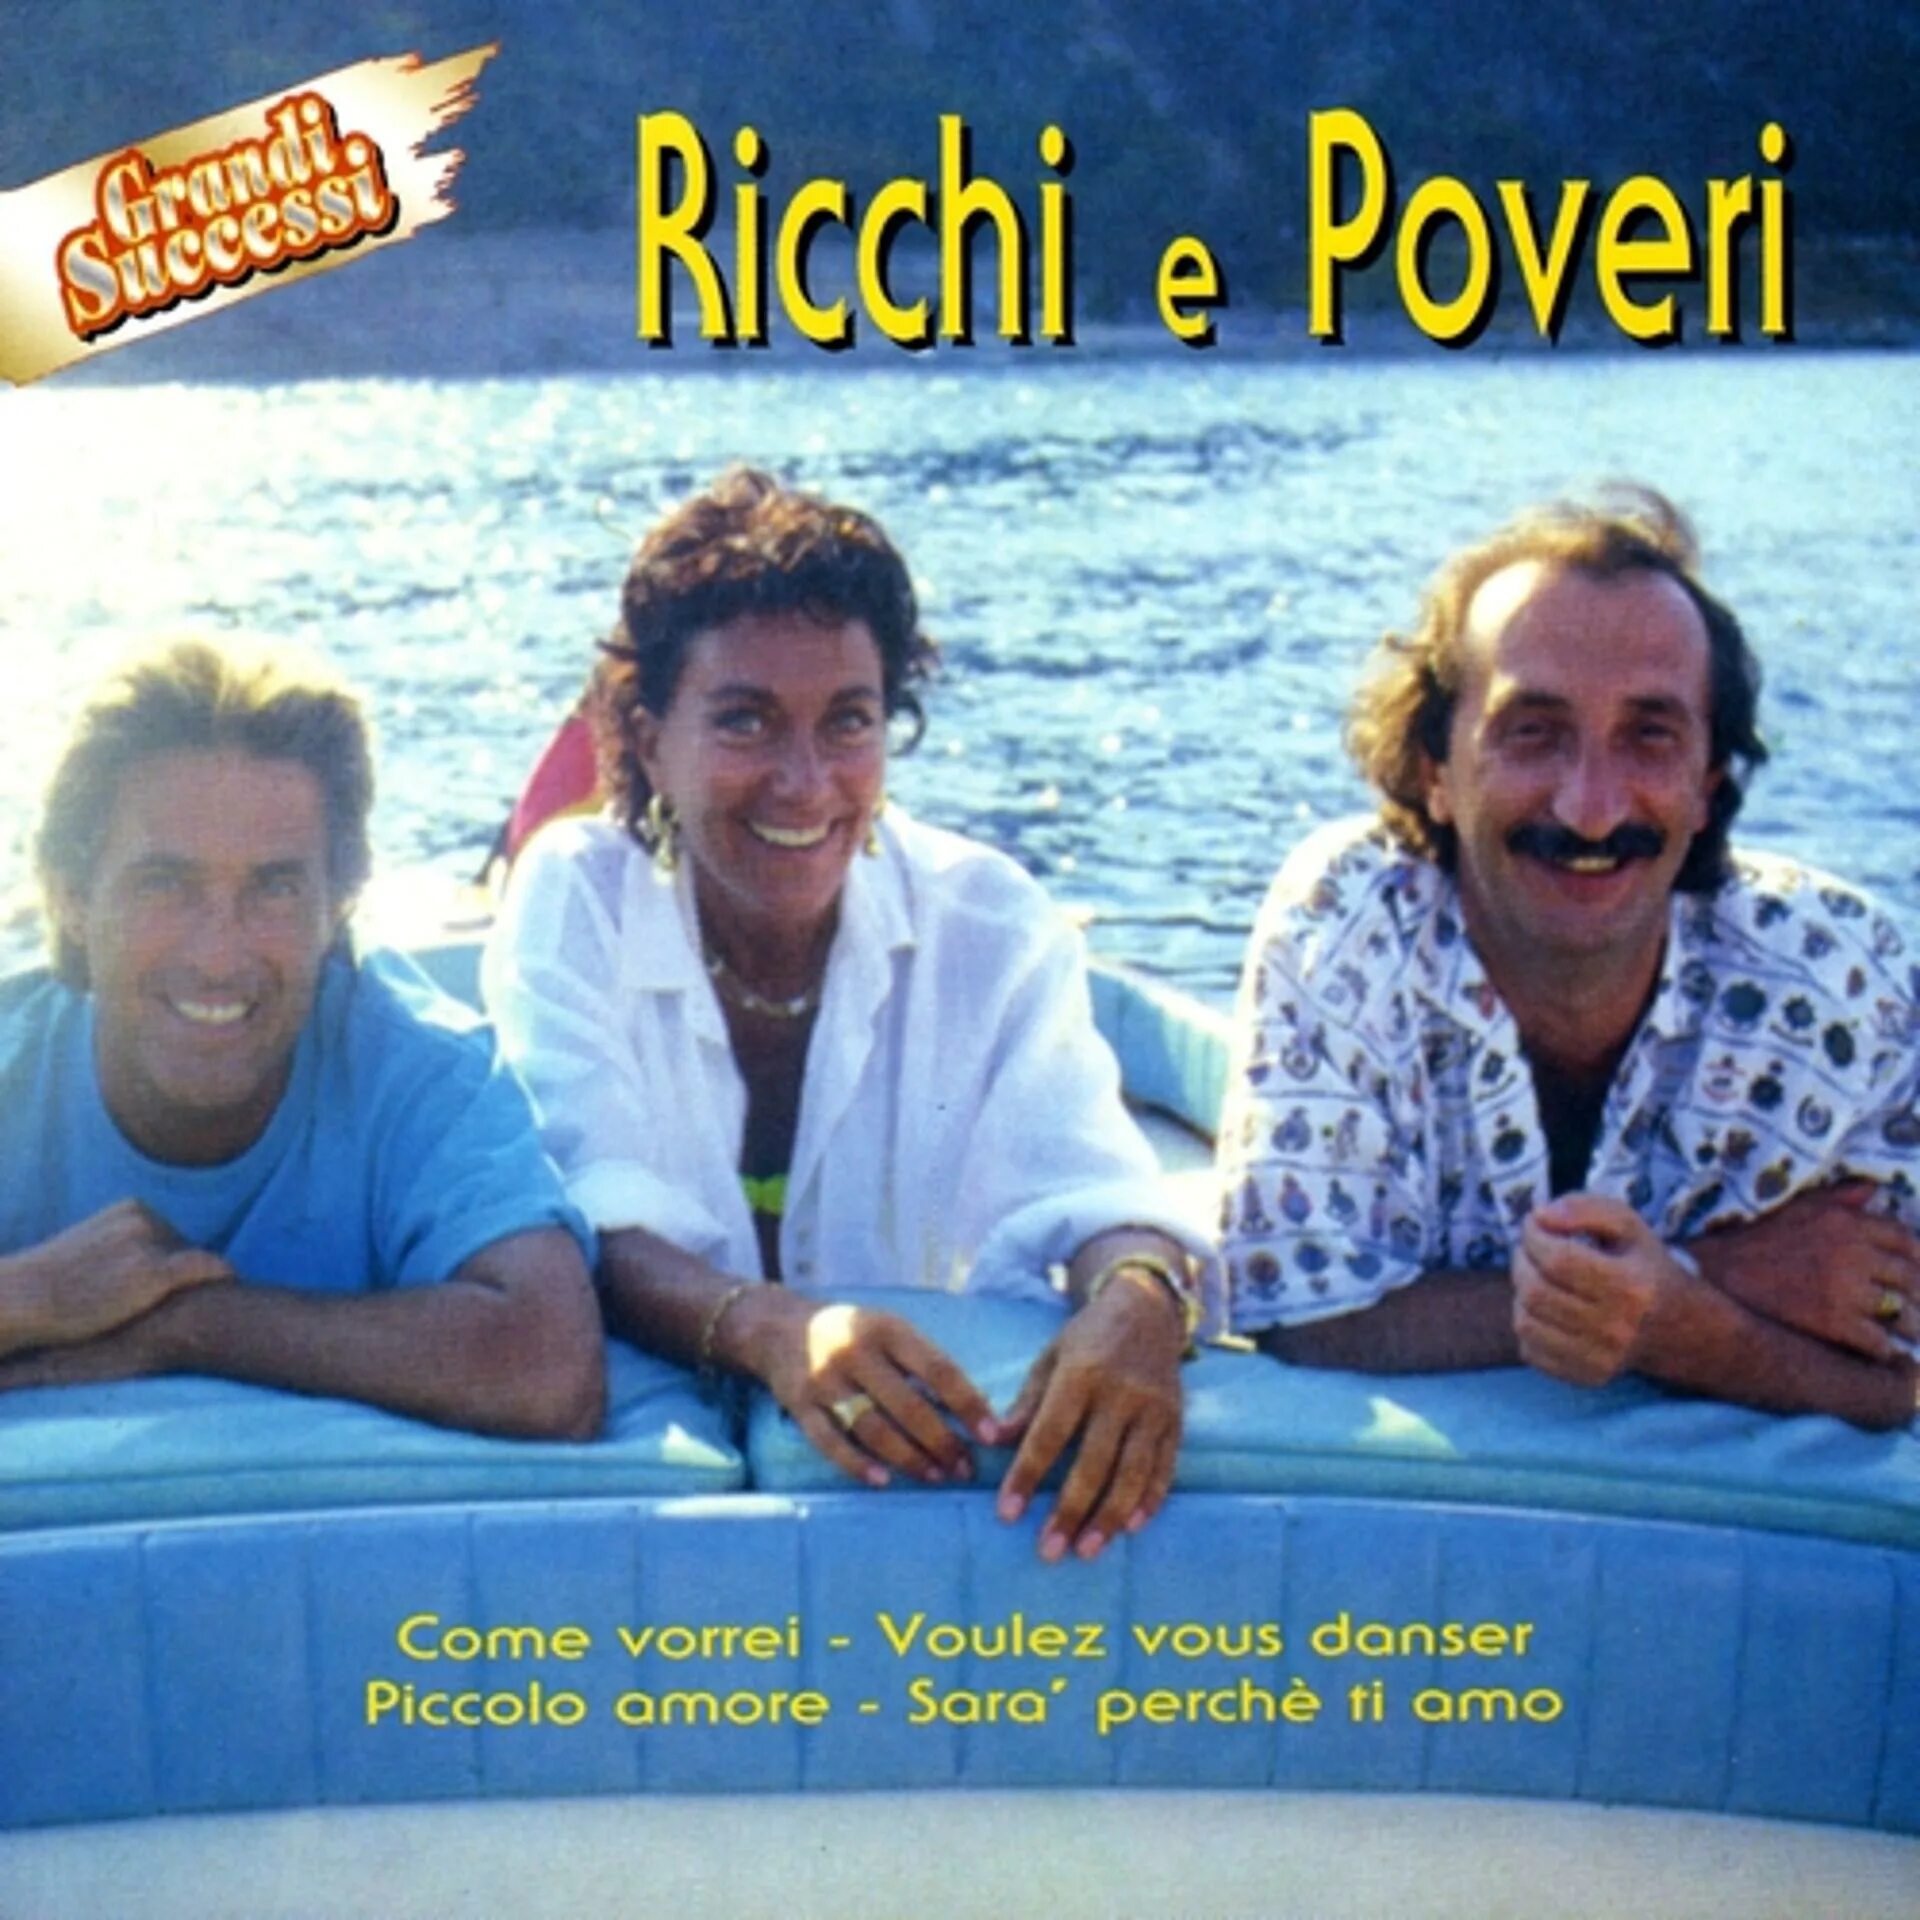 Piccolo amore. Группа Ricchi e Poveri. Группа Ricchi e Poveri альбомы. Ricchi e Poveri - piccolo Amore обложка. Рики и повери в молодости.